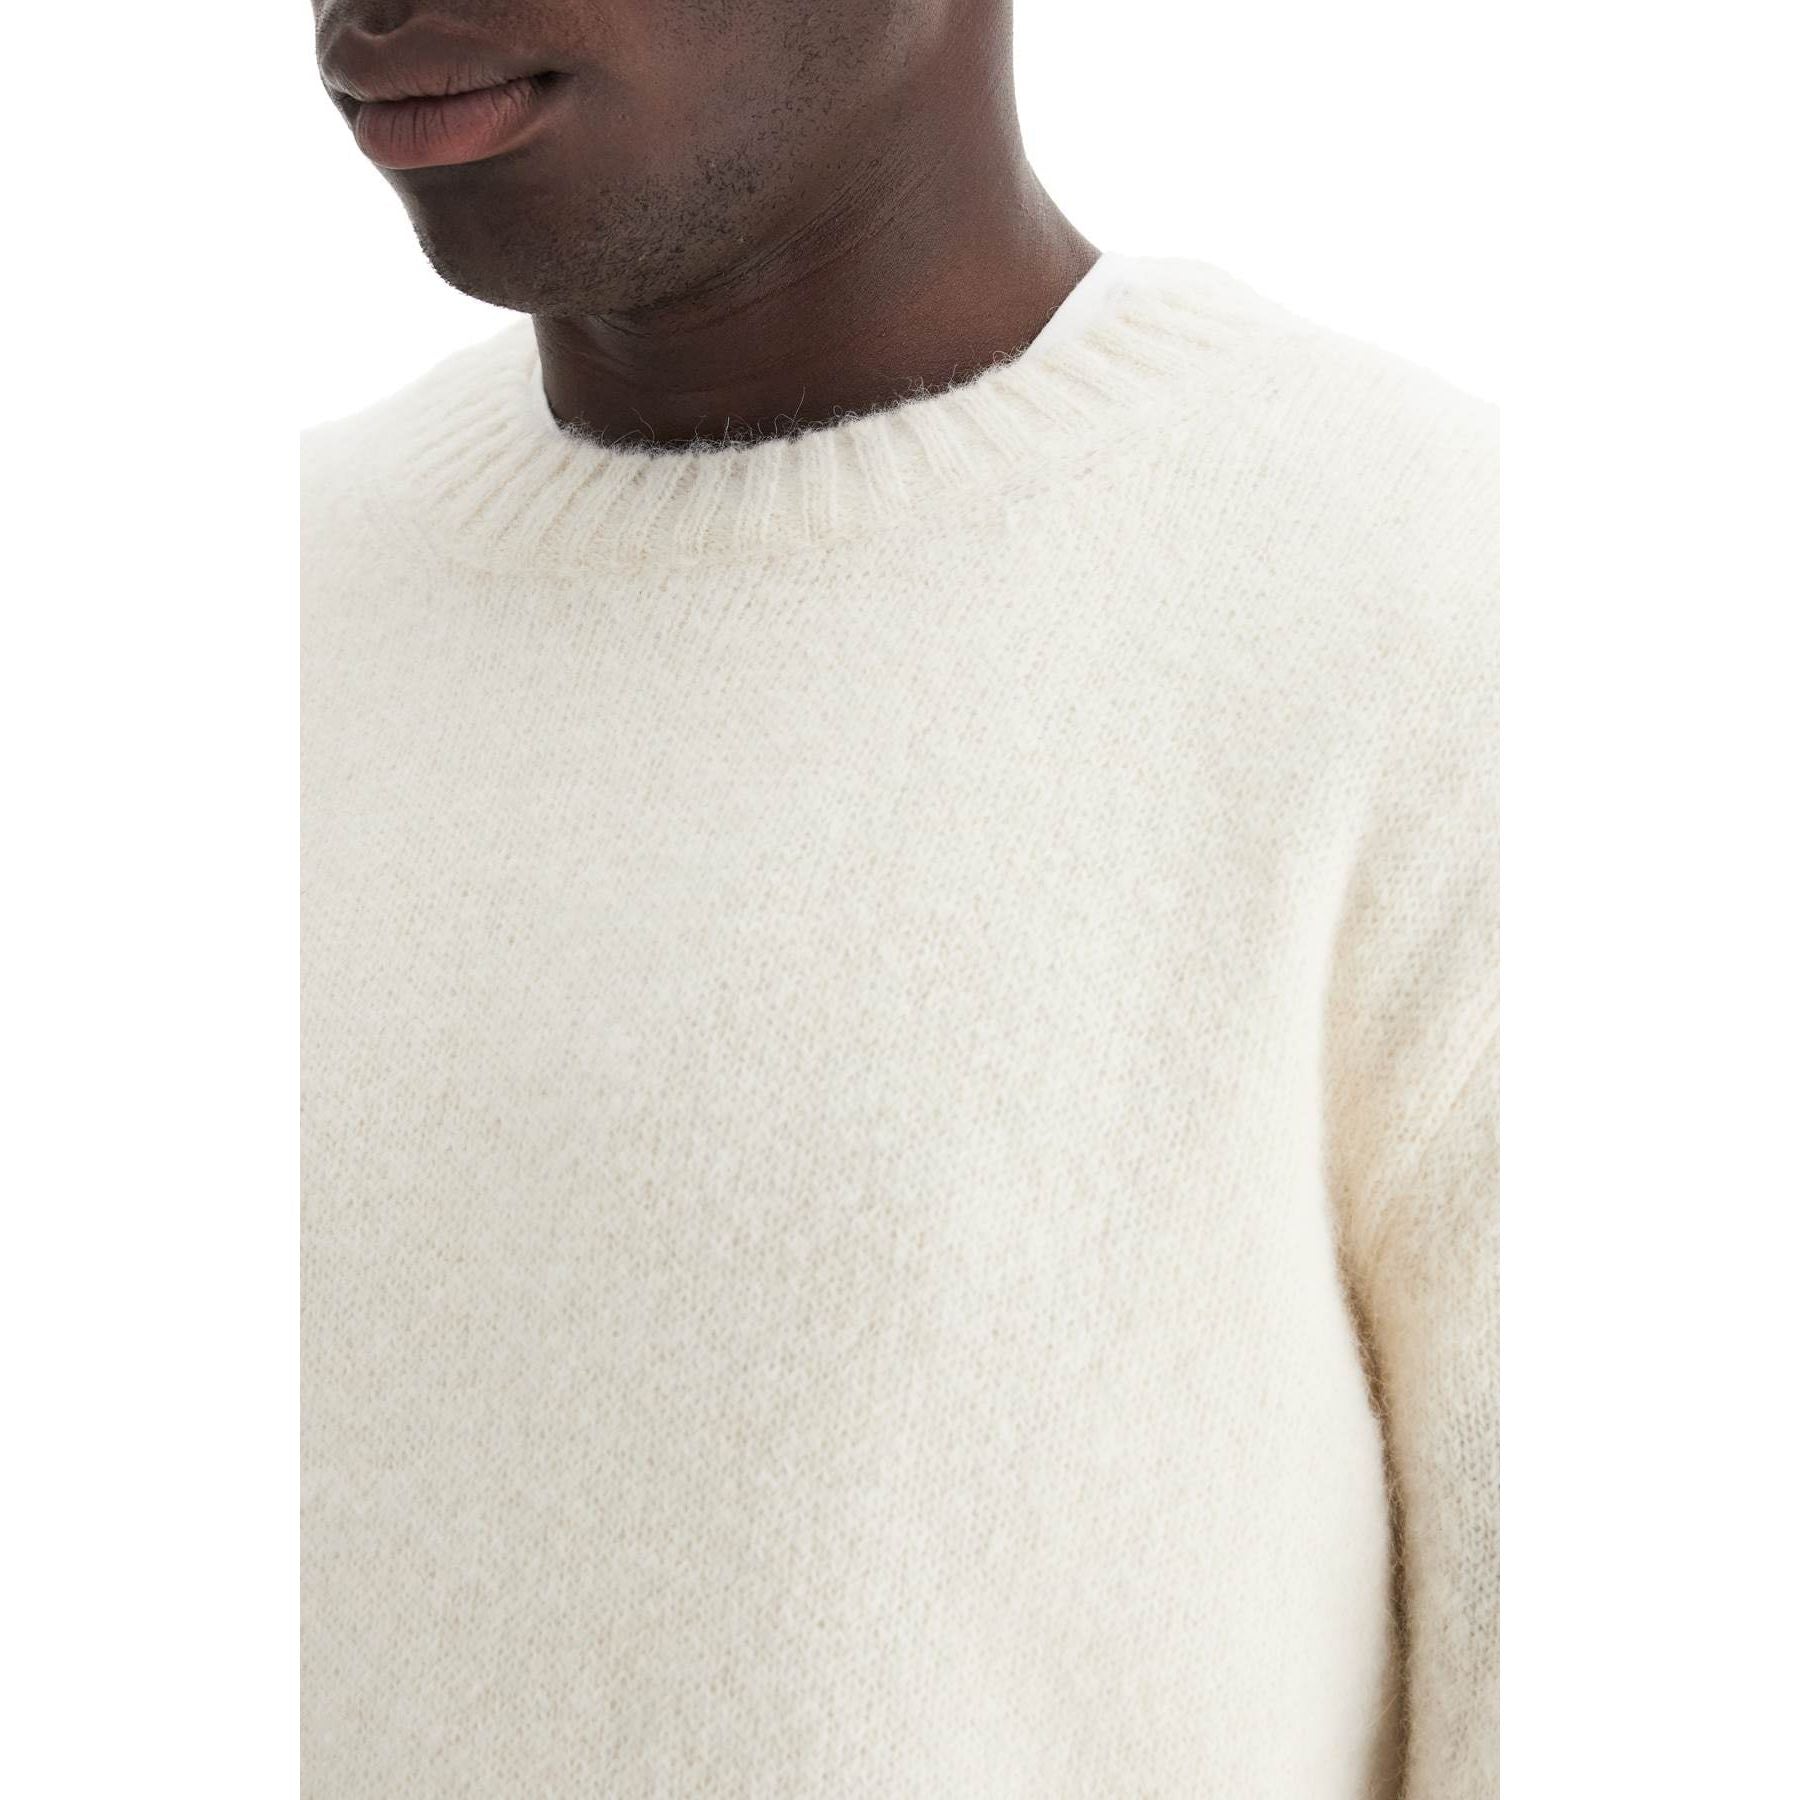 Brushed Alpaca Crewneck Sweater